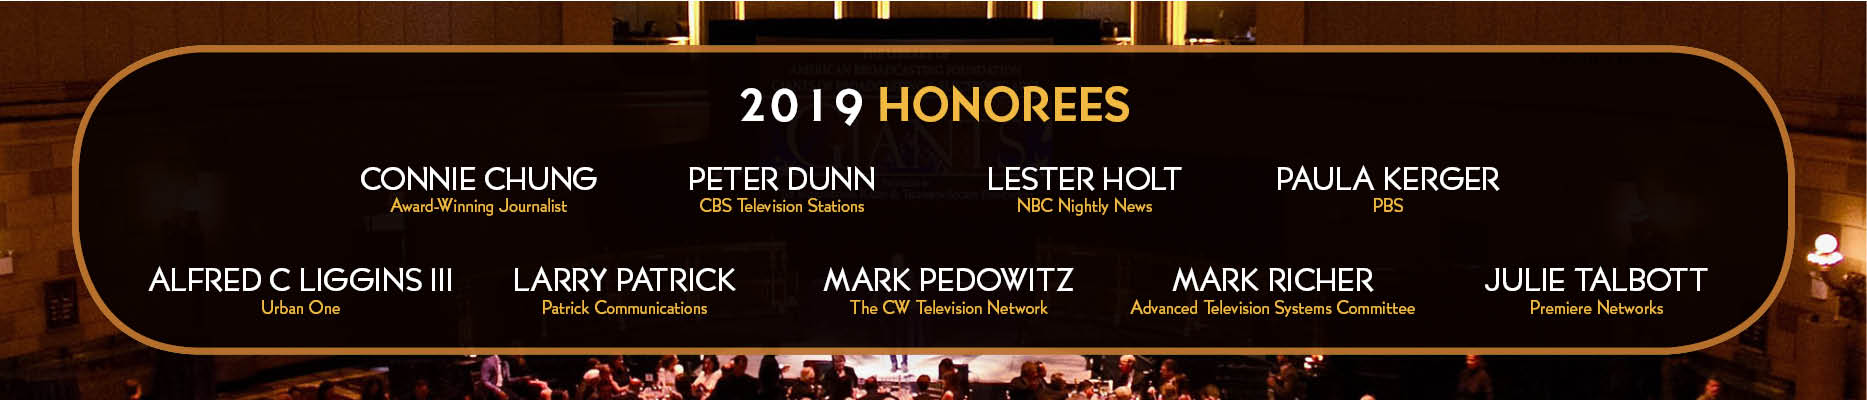 2019 Honorees